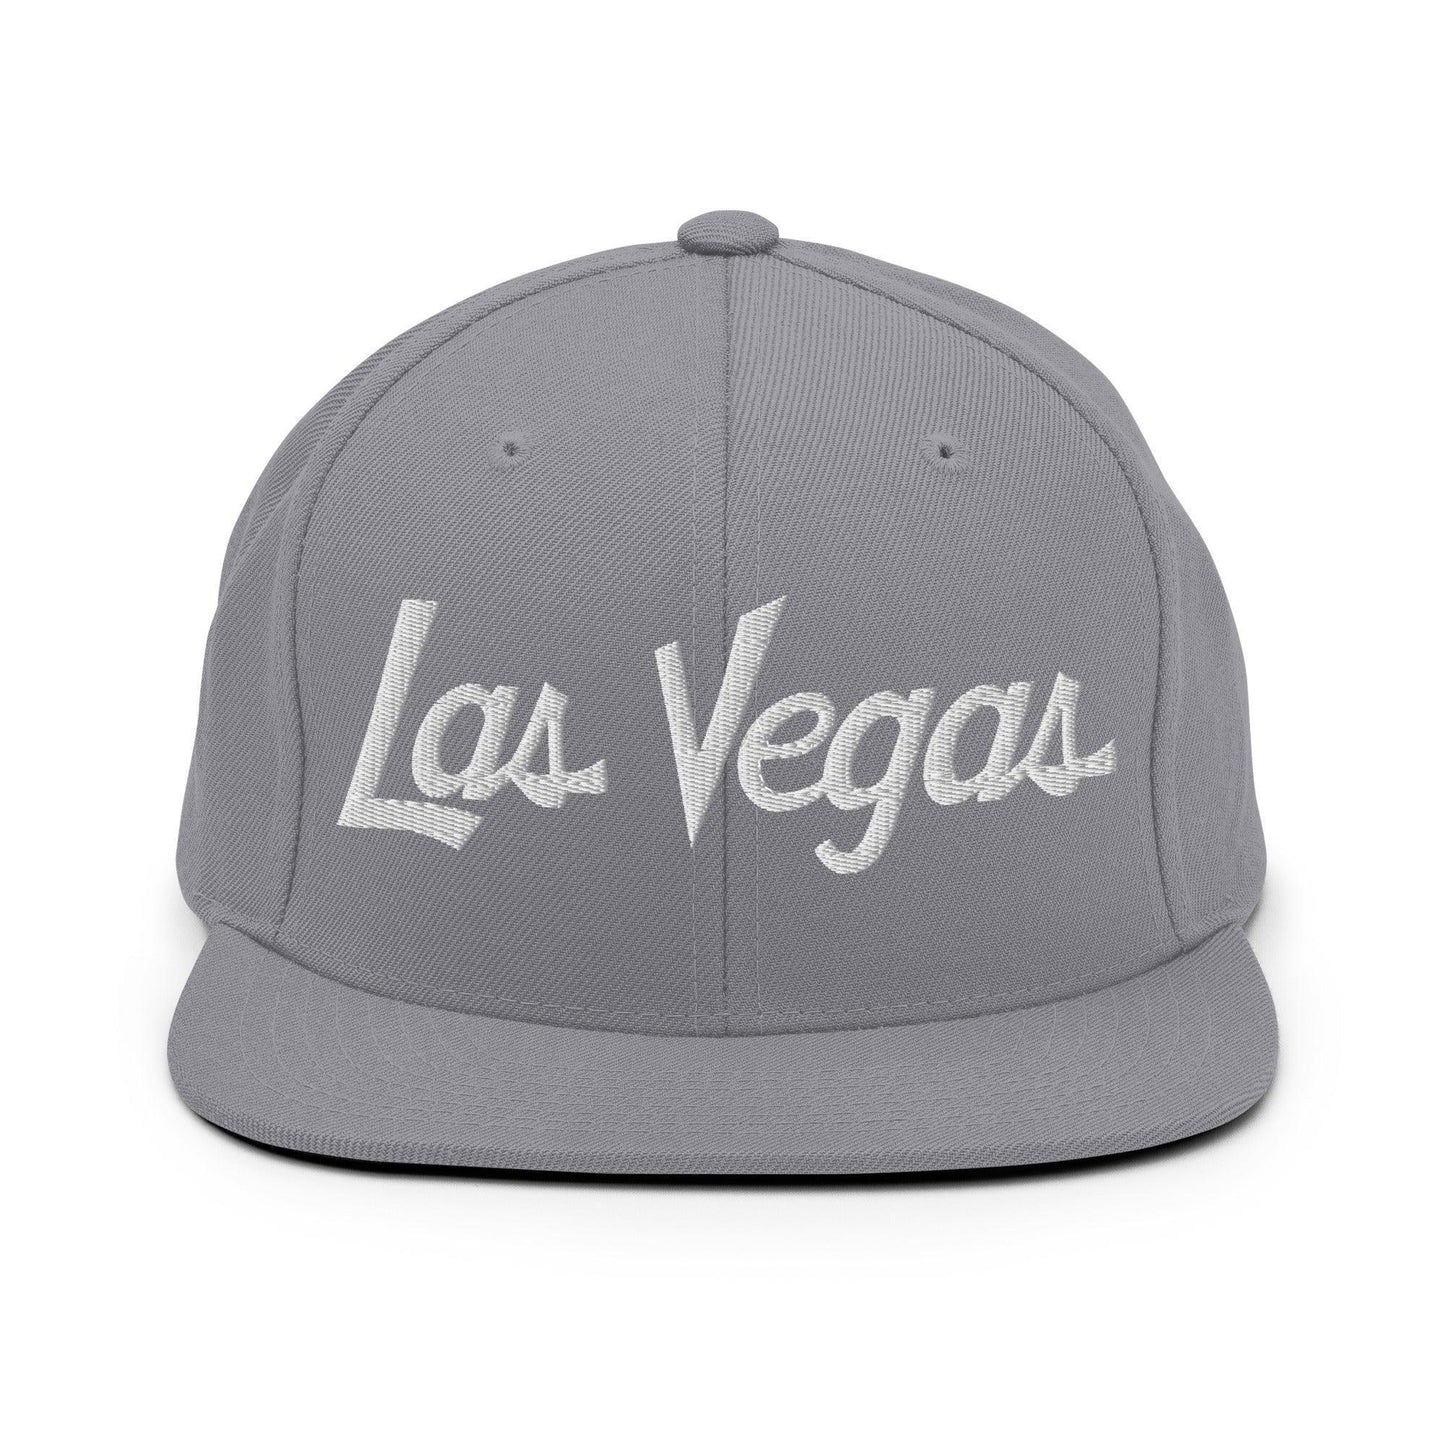 Las Vegas Script Snapback Hat Silver